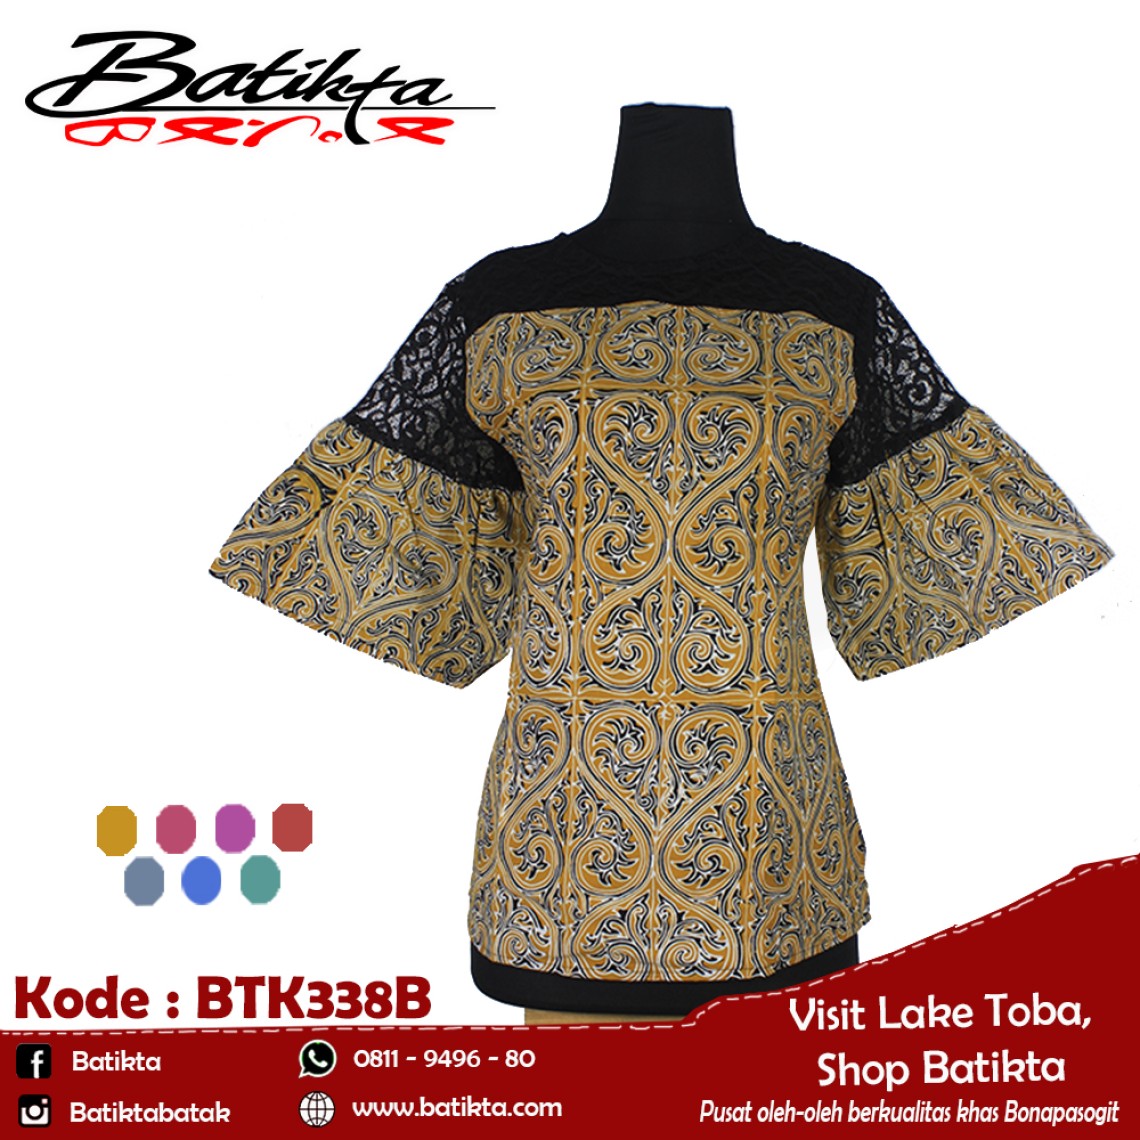 BTK338B Blus Batik Motif Gorga Warna Coklat Putih Hitam profile picture